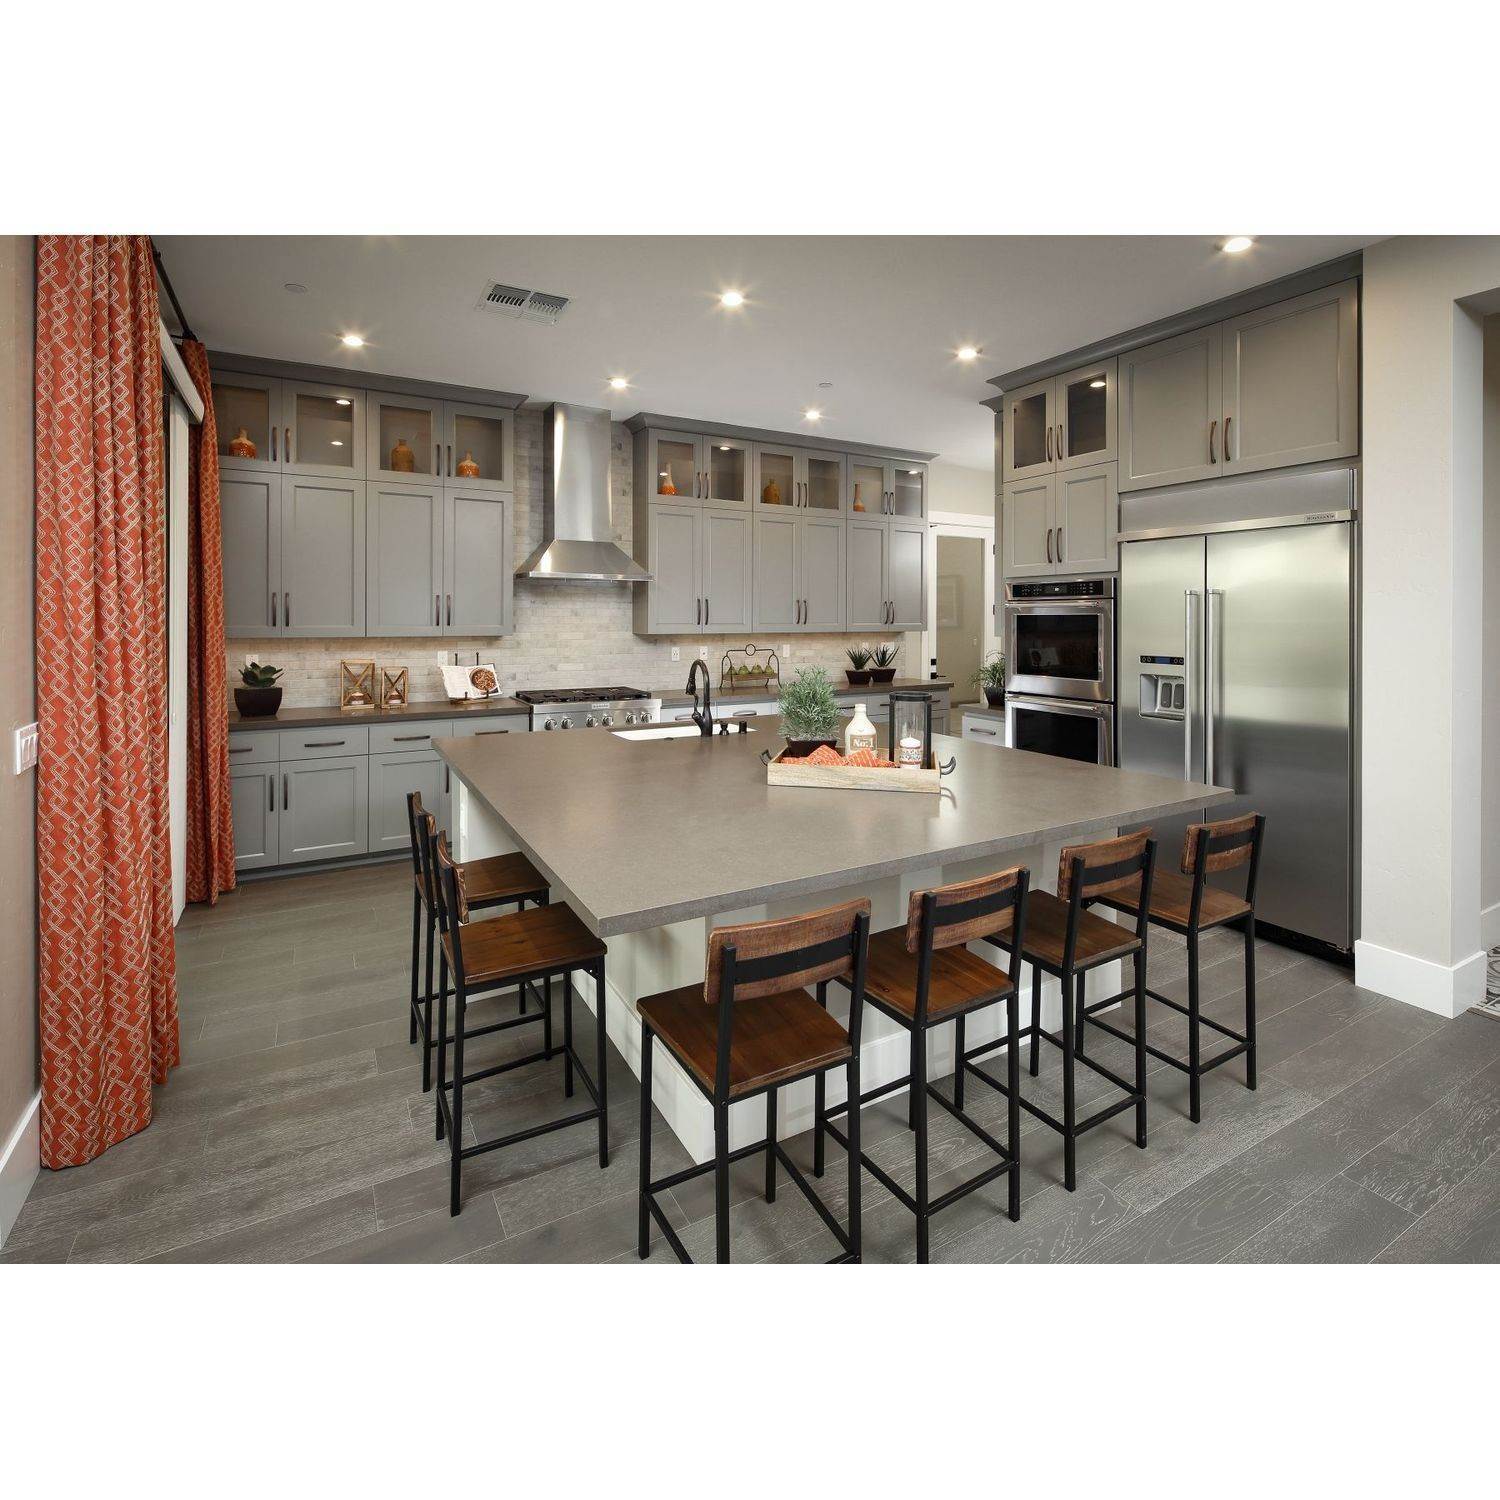 11. Turkey Creek Estates xây dựng tại 2036 Pinehurst Drive, Lincoln, CA 95648